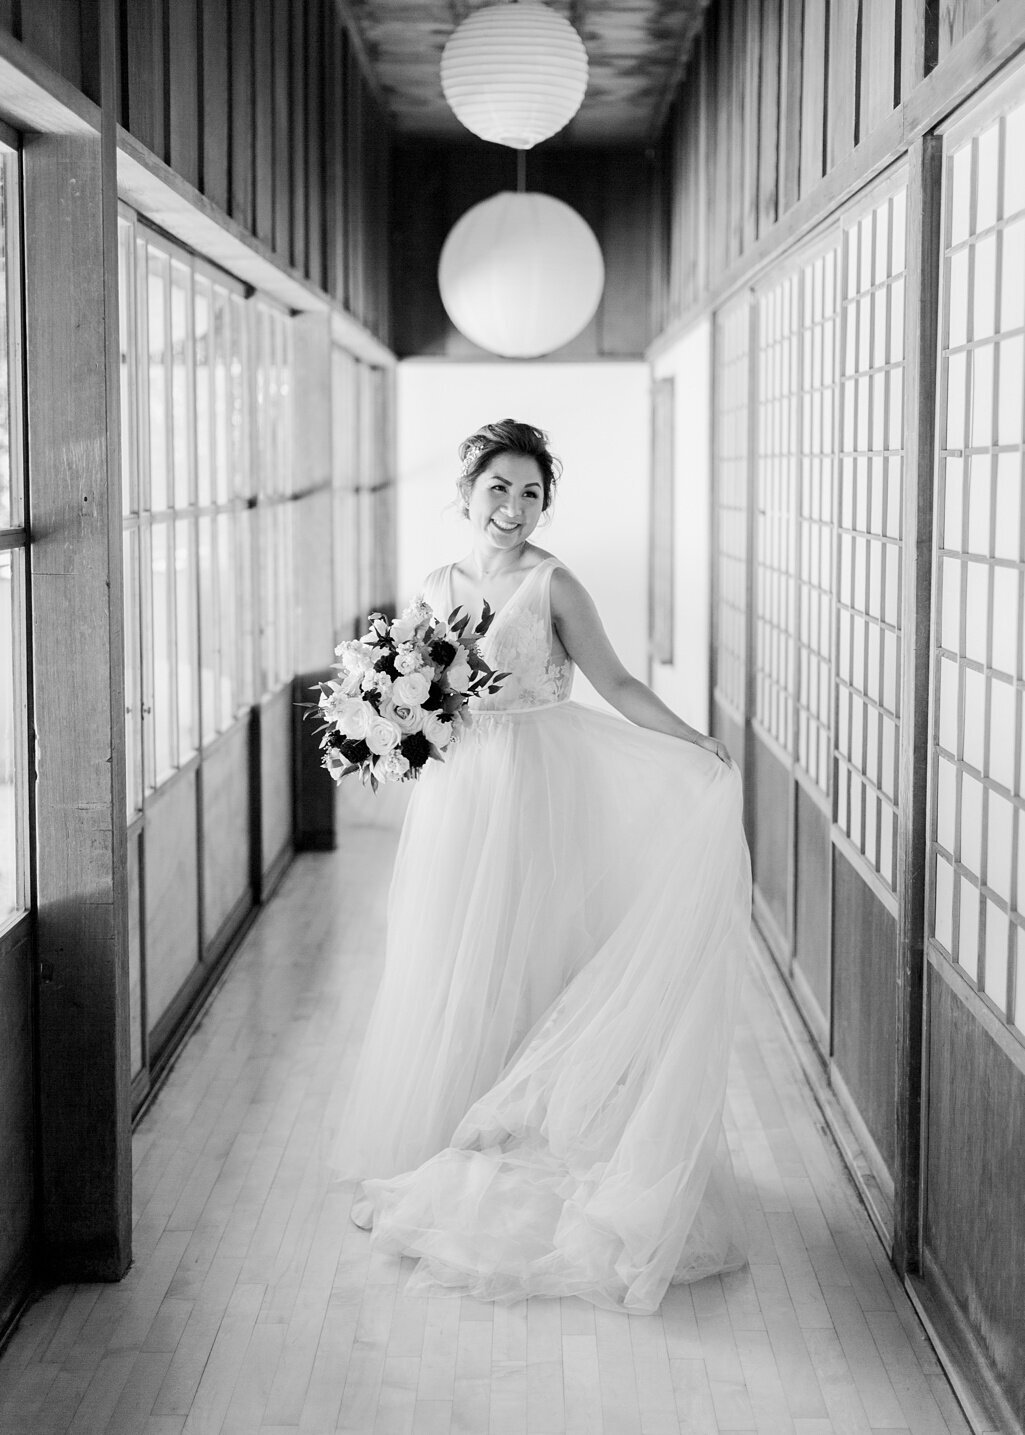 Jessie-Barksdale-Photography_Hakone-Gardens-Saratoga_San-Francisco-Bay-Area-Wedding-Photographer_0018